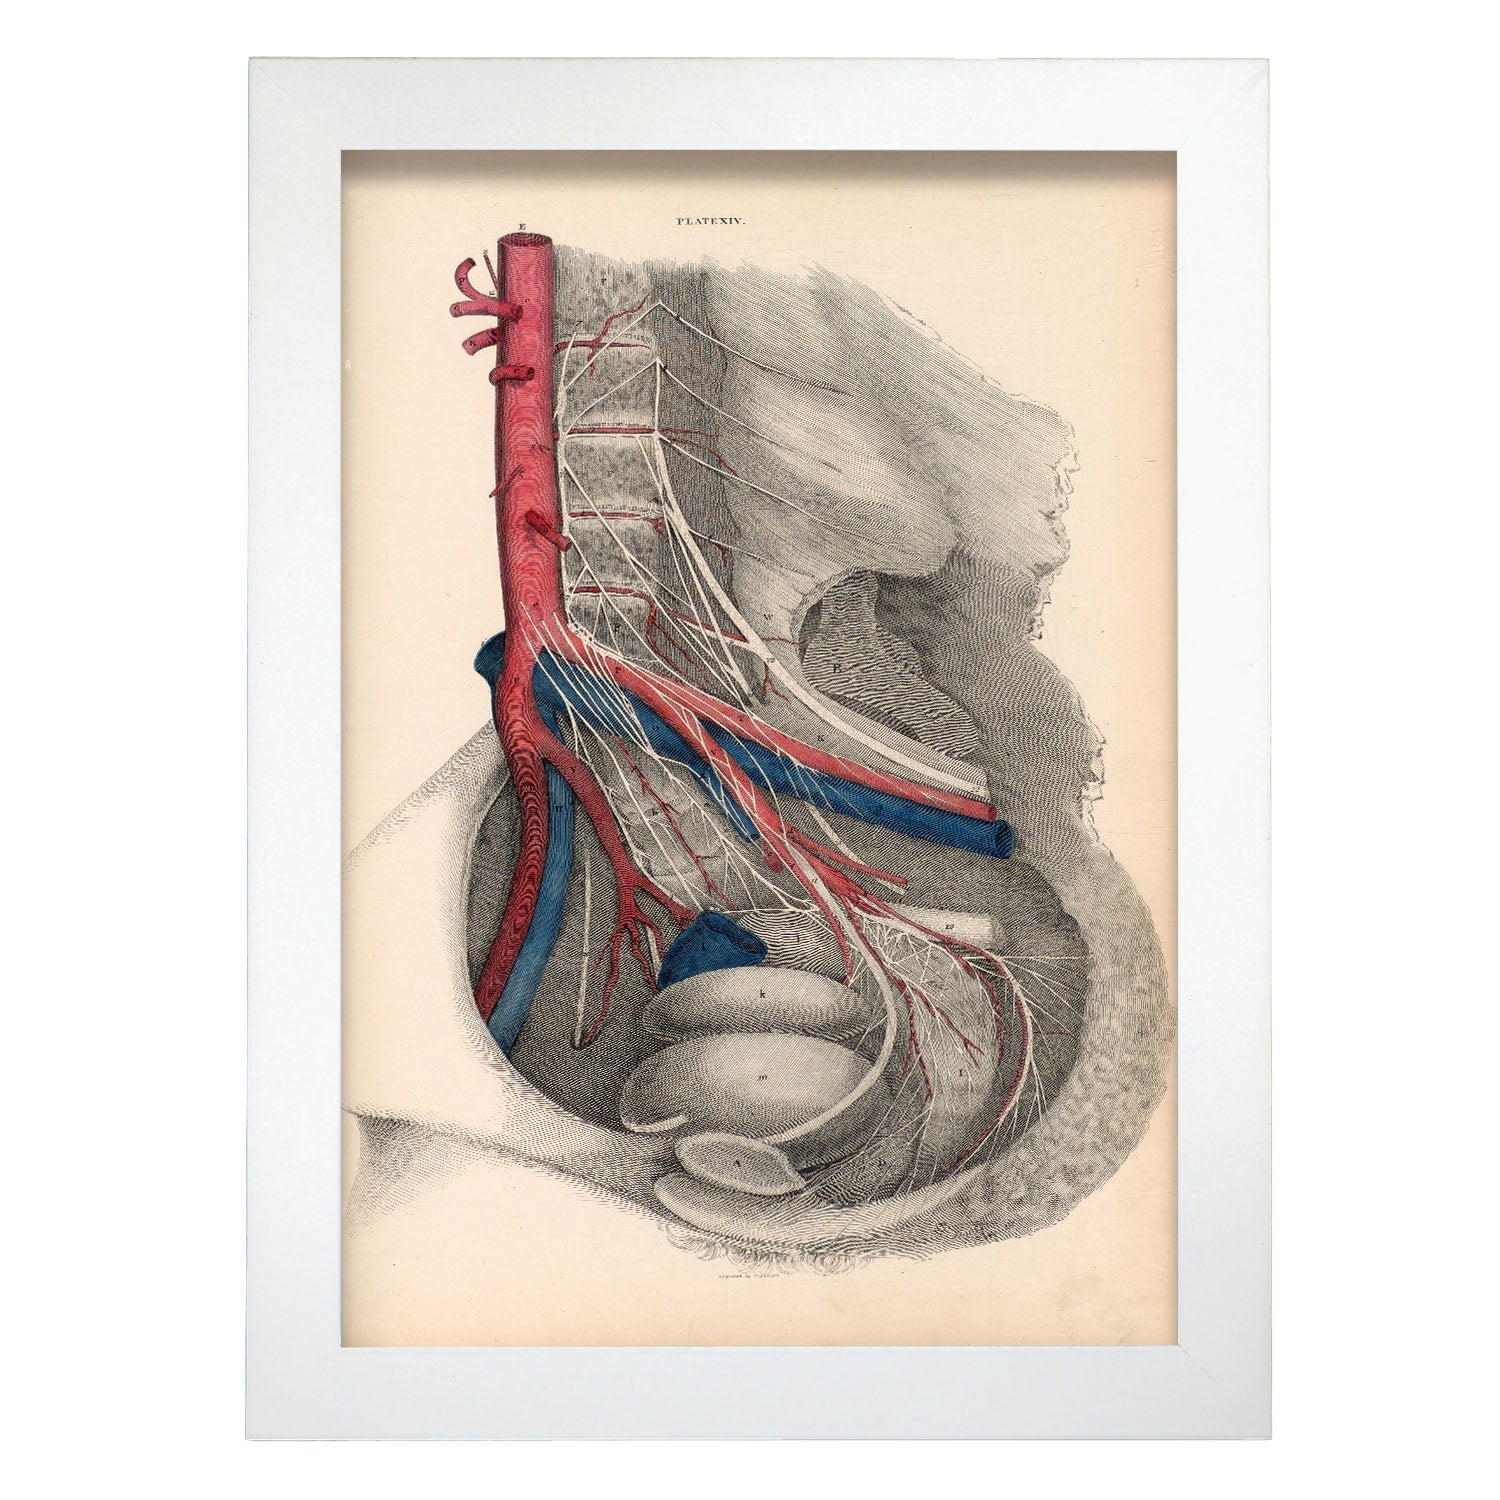 Dissection of the pelvis-Artwork-Nacnic-A4-Marco Blanco-Nacnic Estudio SL